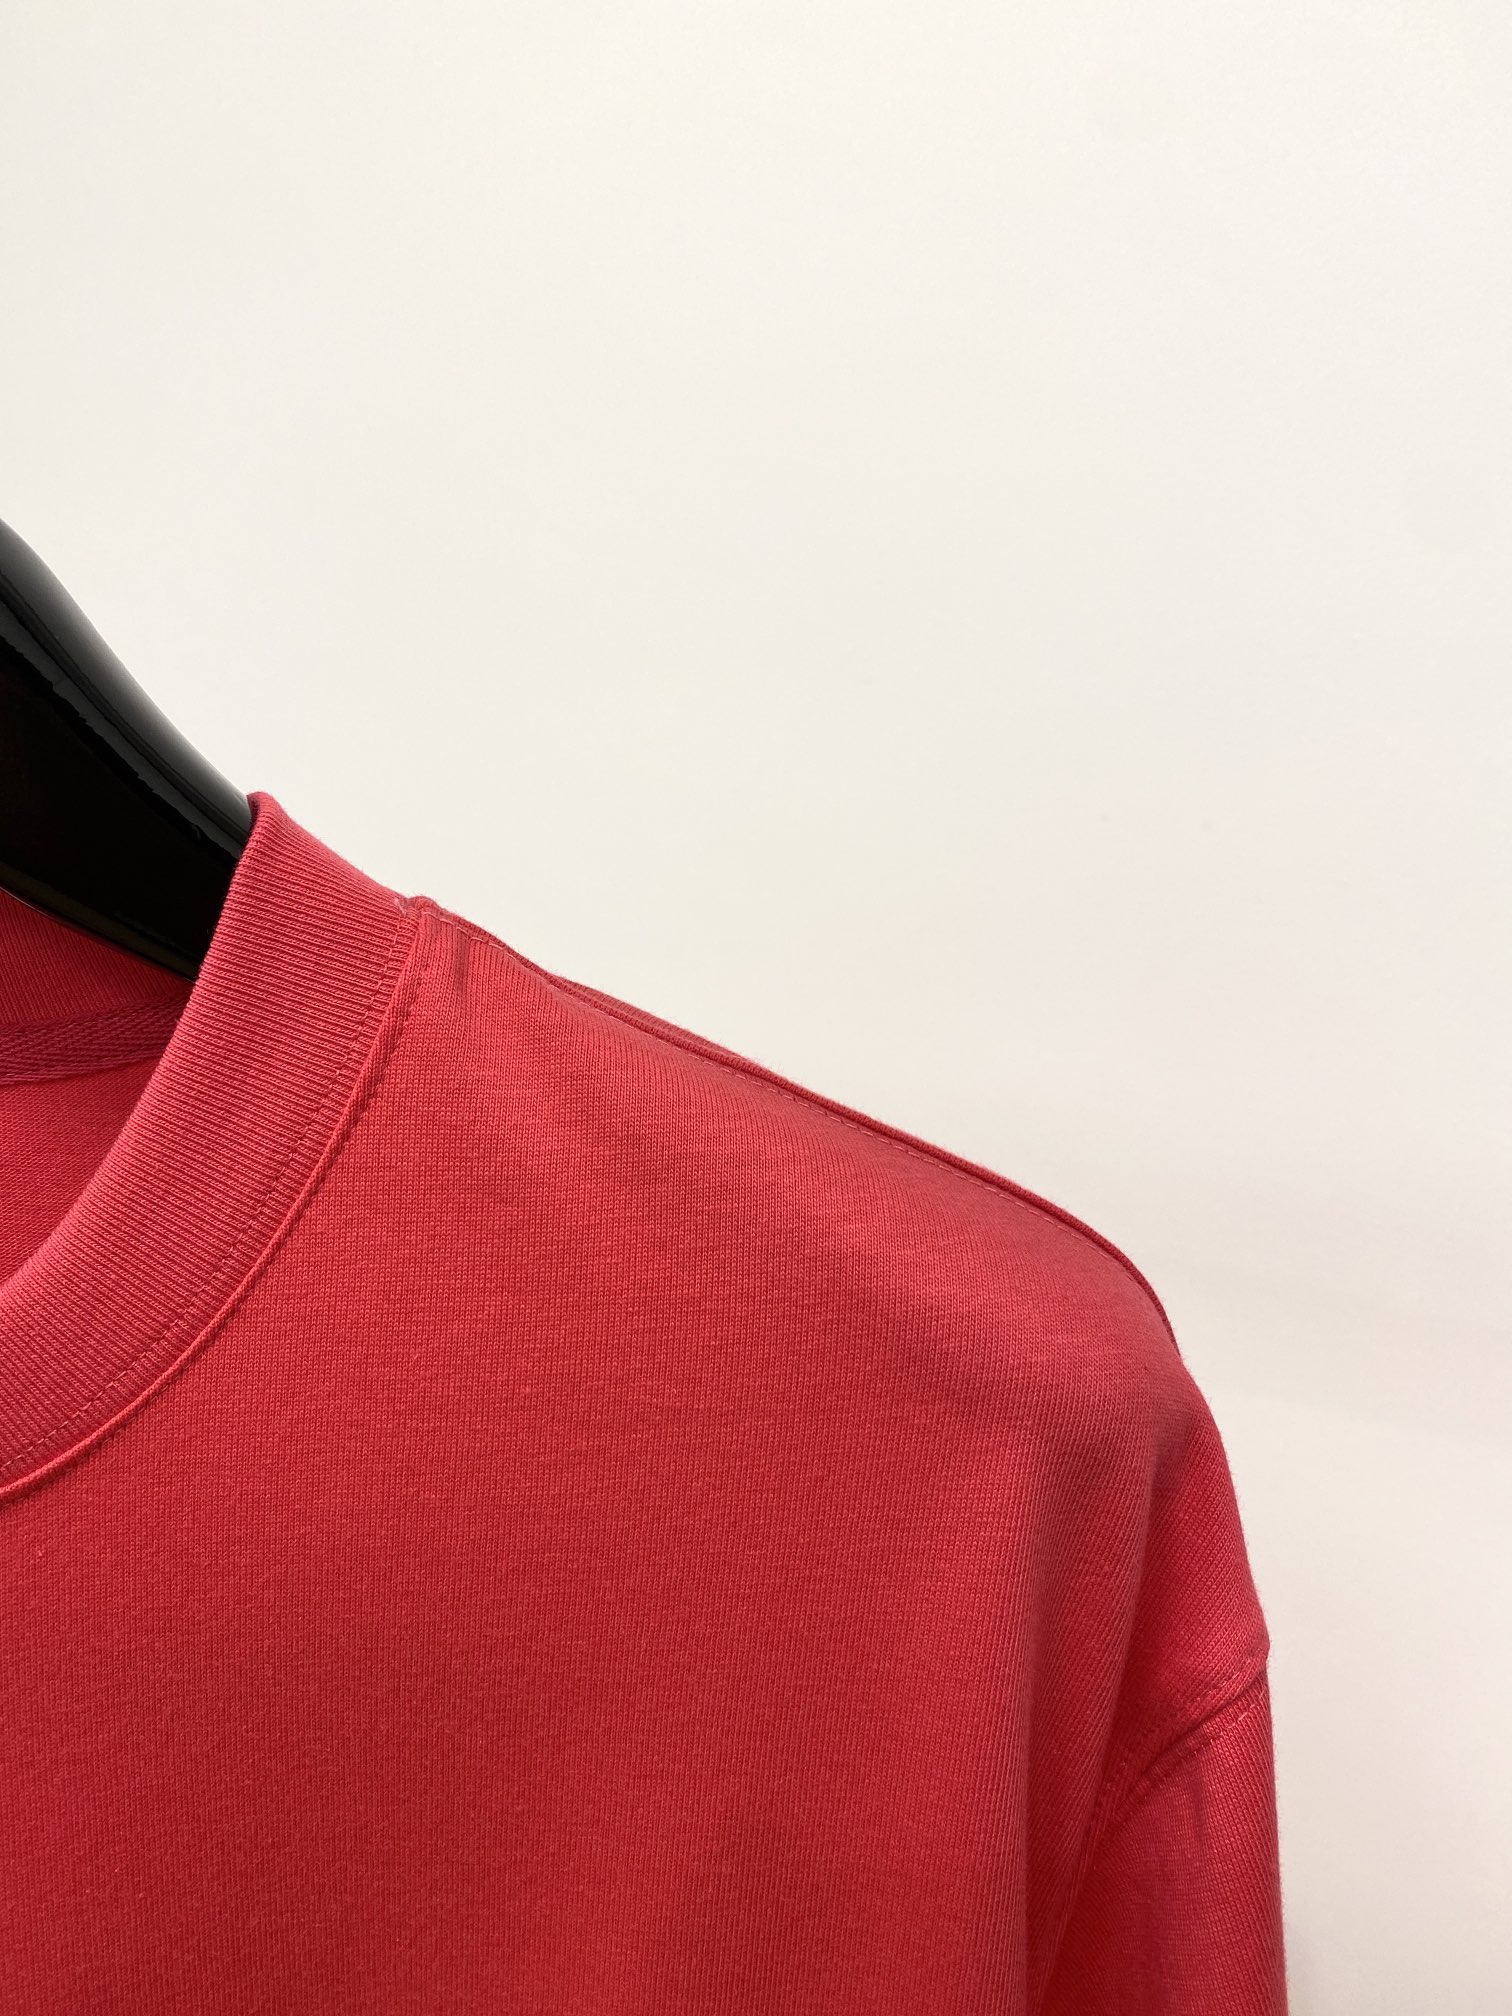 chanel t シャツ 値段Ｎ級品 純綿 トップス ゆったり 短袖 プリント シンプル ファッション レッド_4